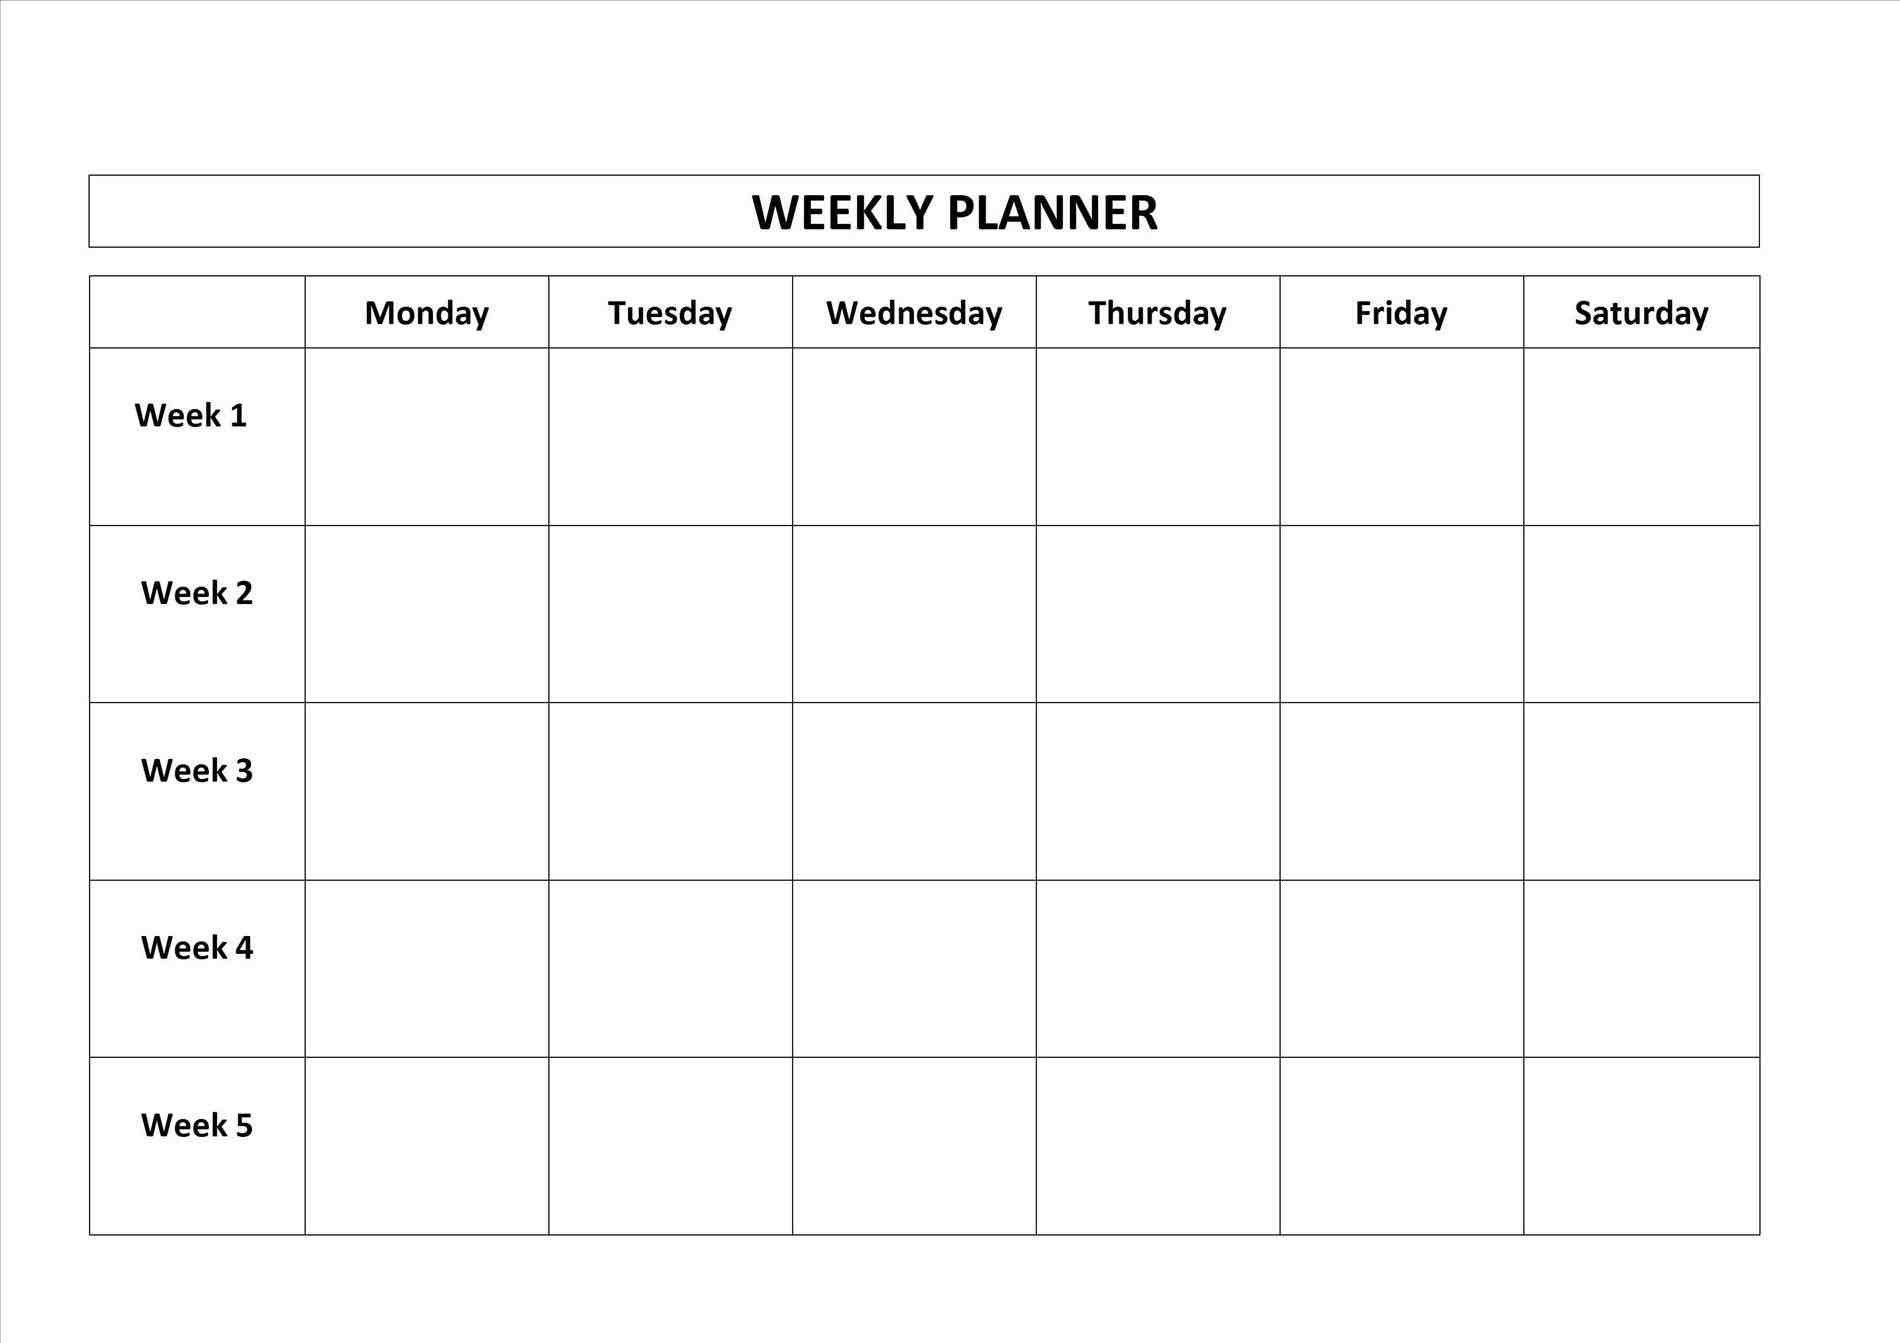 Monday To Friday Blank Calendar Calendar Template Printable In Sunday Through Monday Blank Weekly Calendar Template Calendar Template Blank Calendar Template